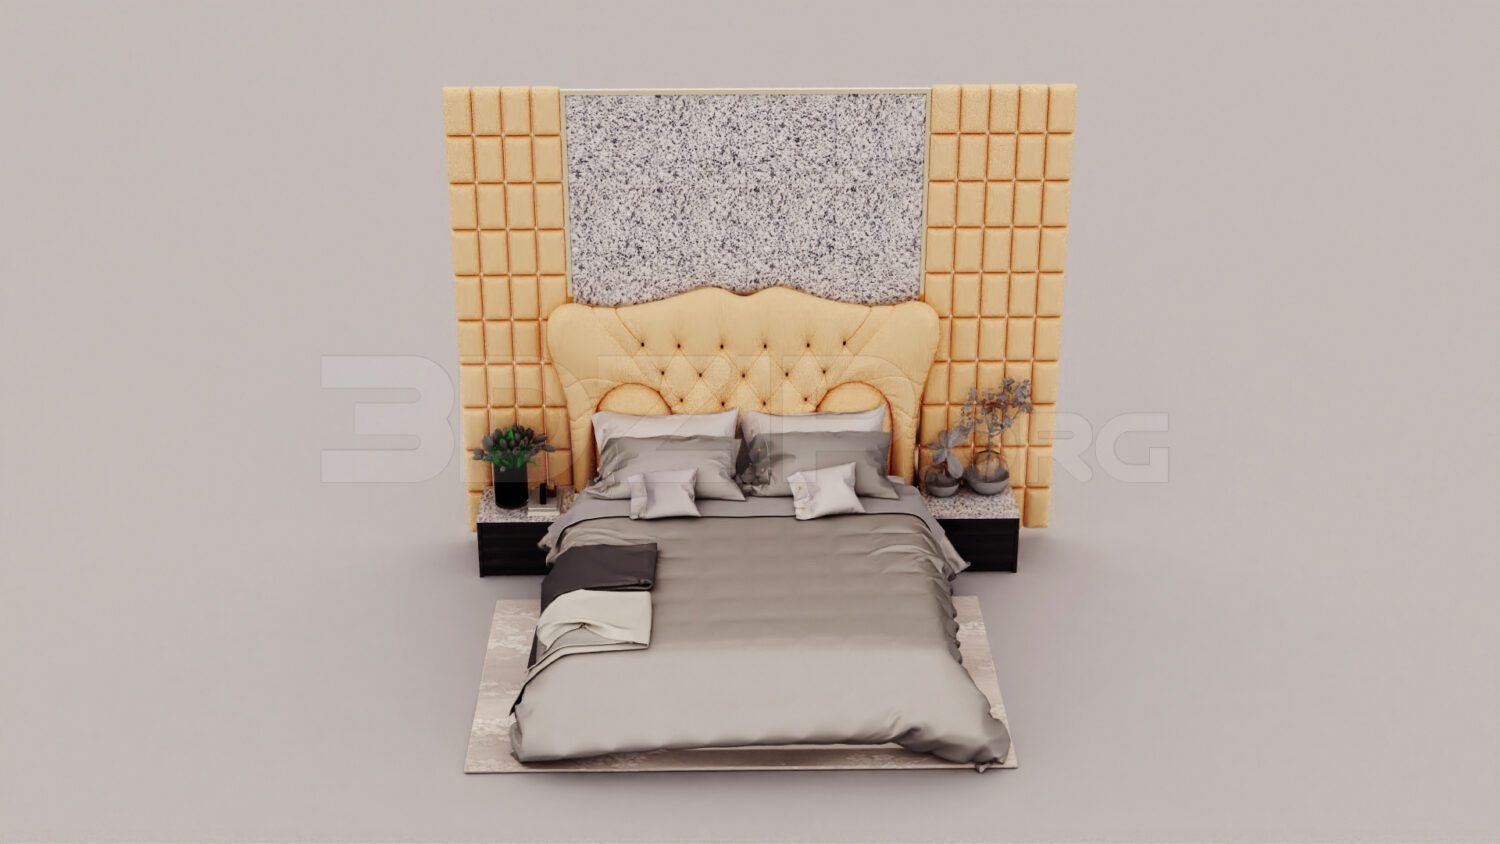 1152. Free 3D Bed Model Download